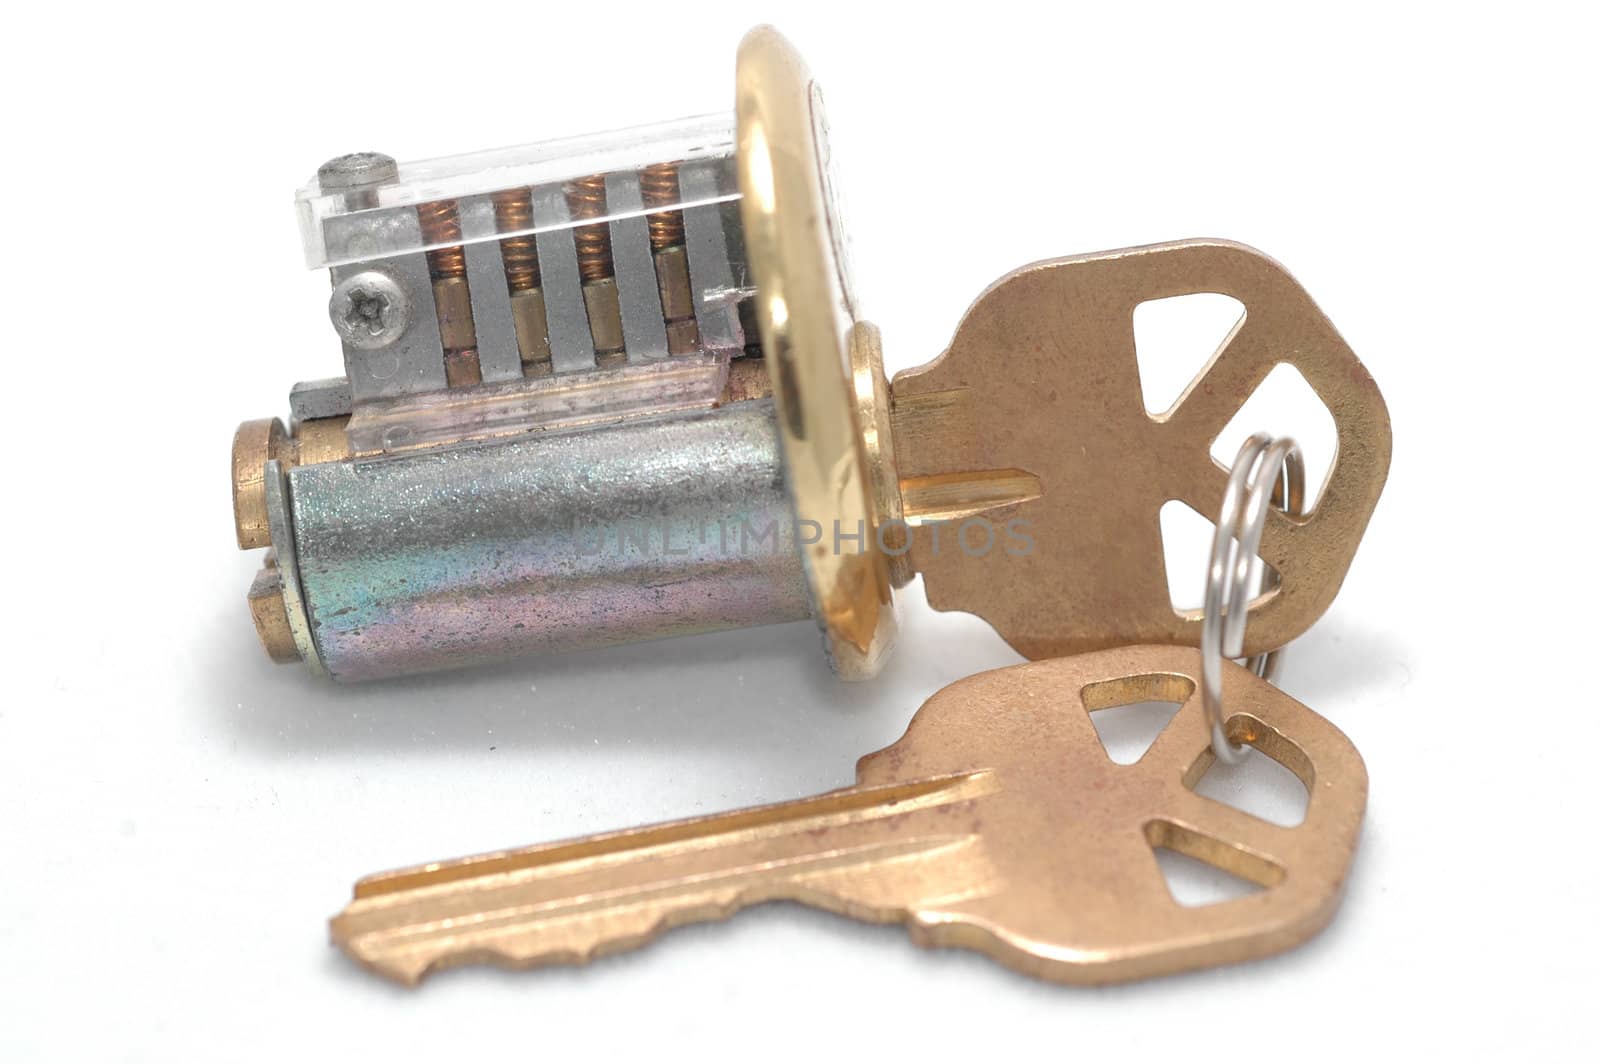 Cutaway lock with wrong key by edan